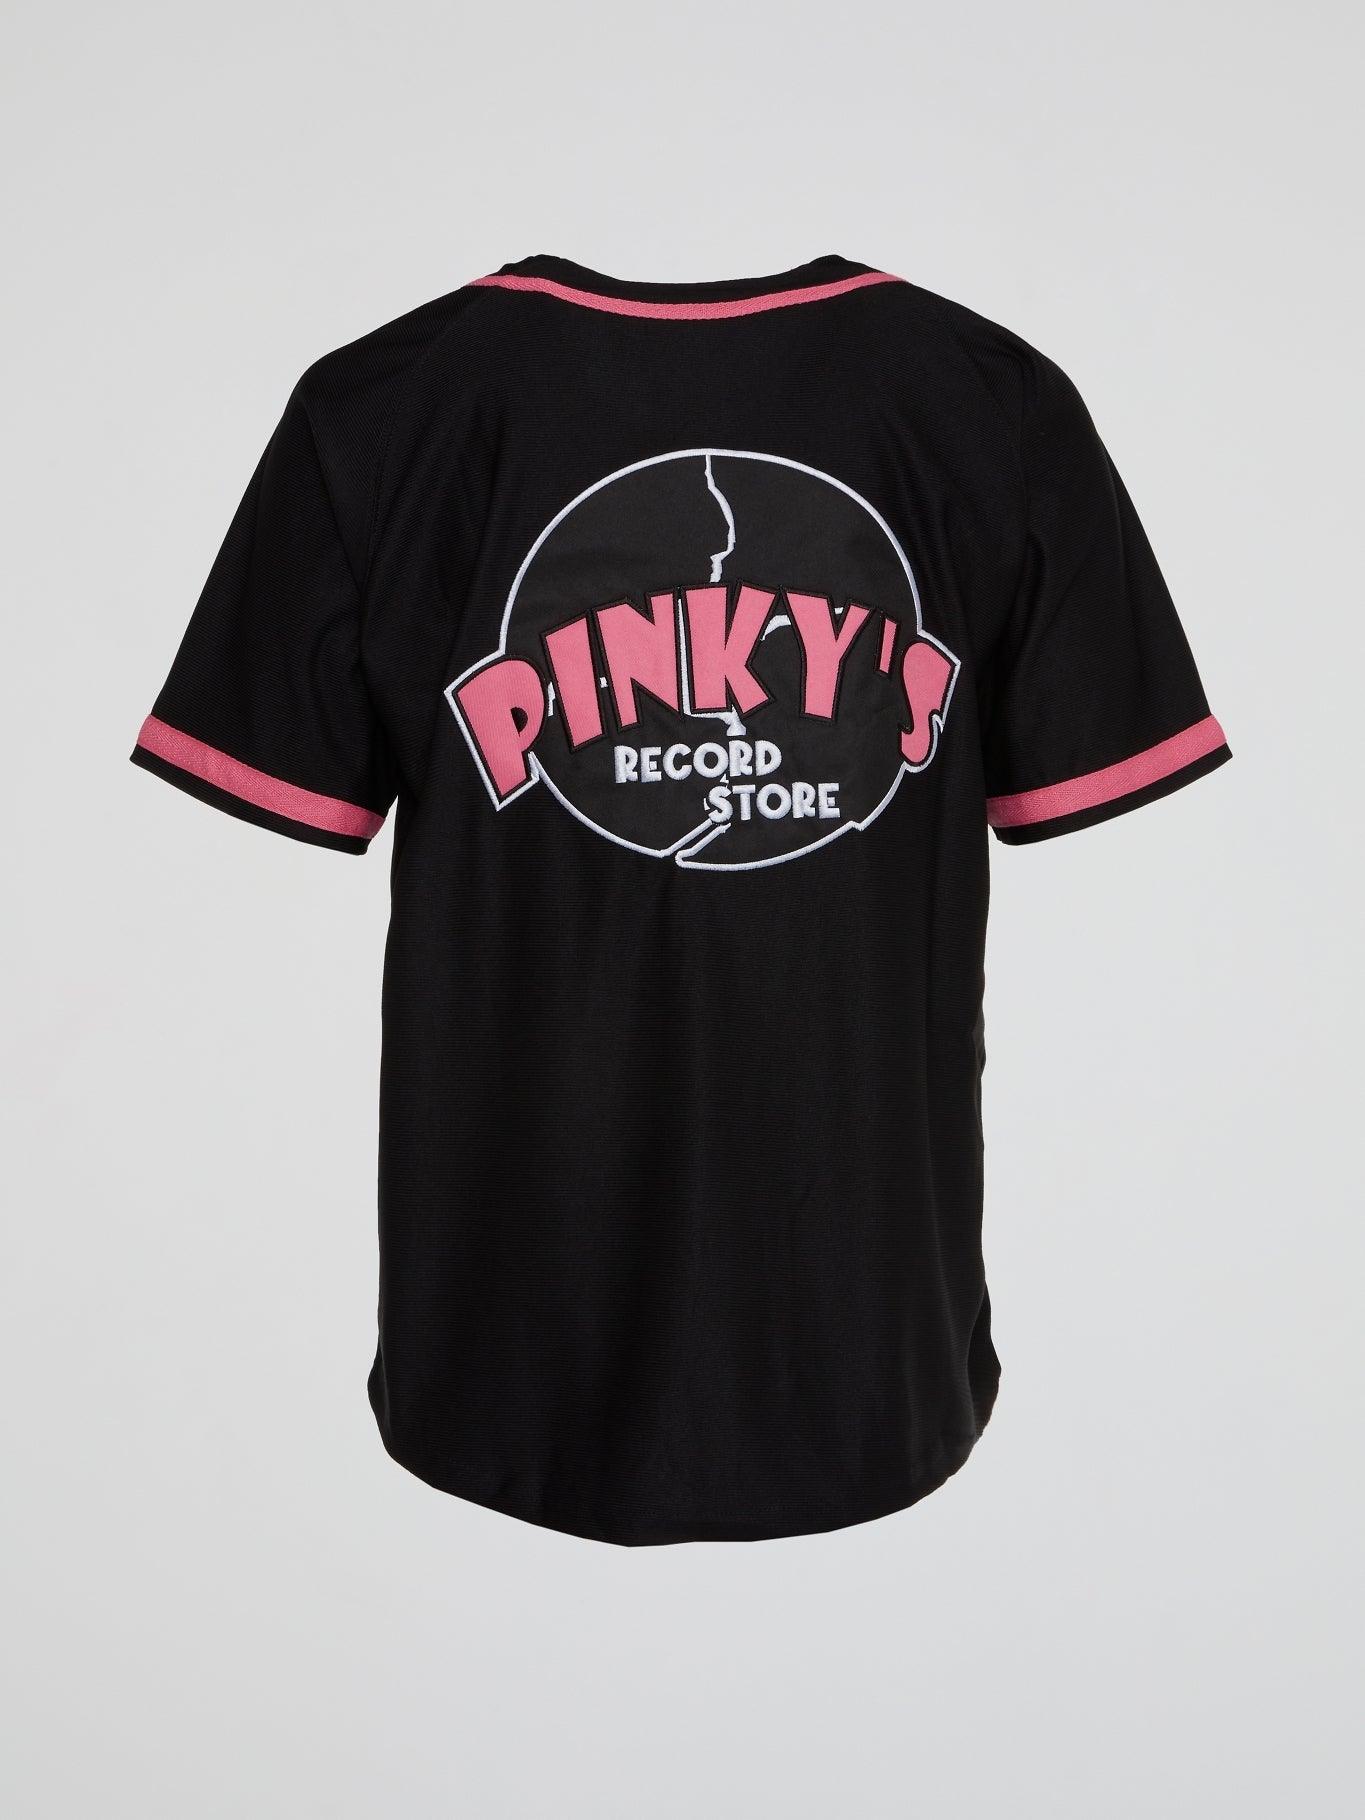 Next Friday Pinky's Jersey Black - B-Hype Society